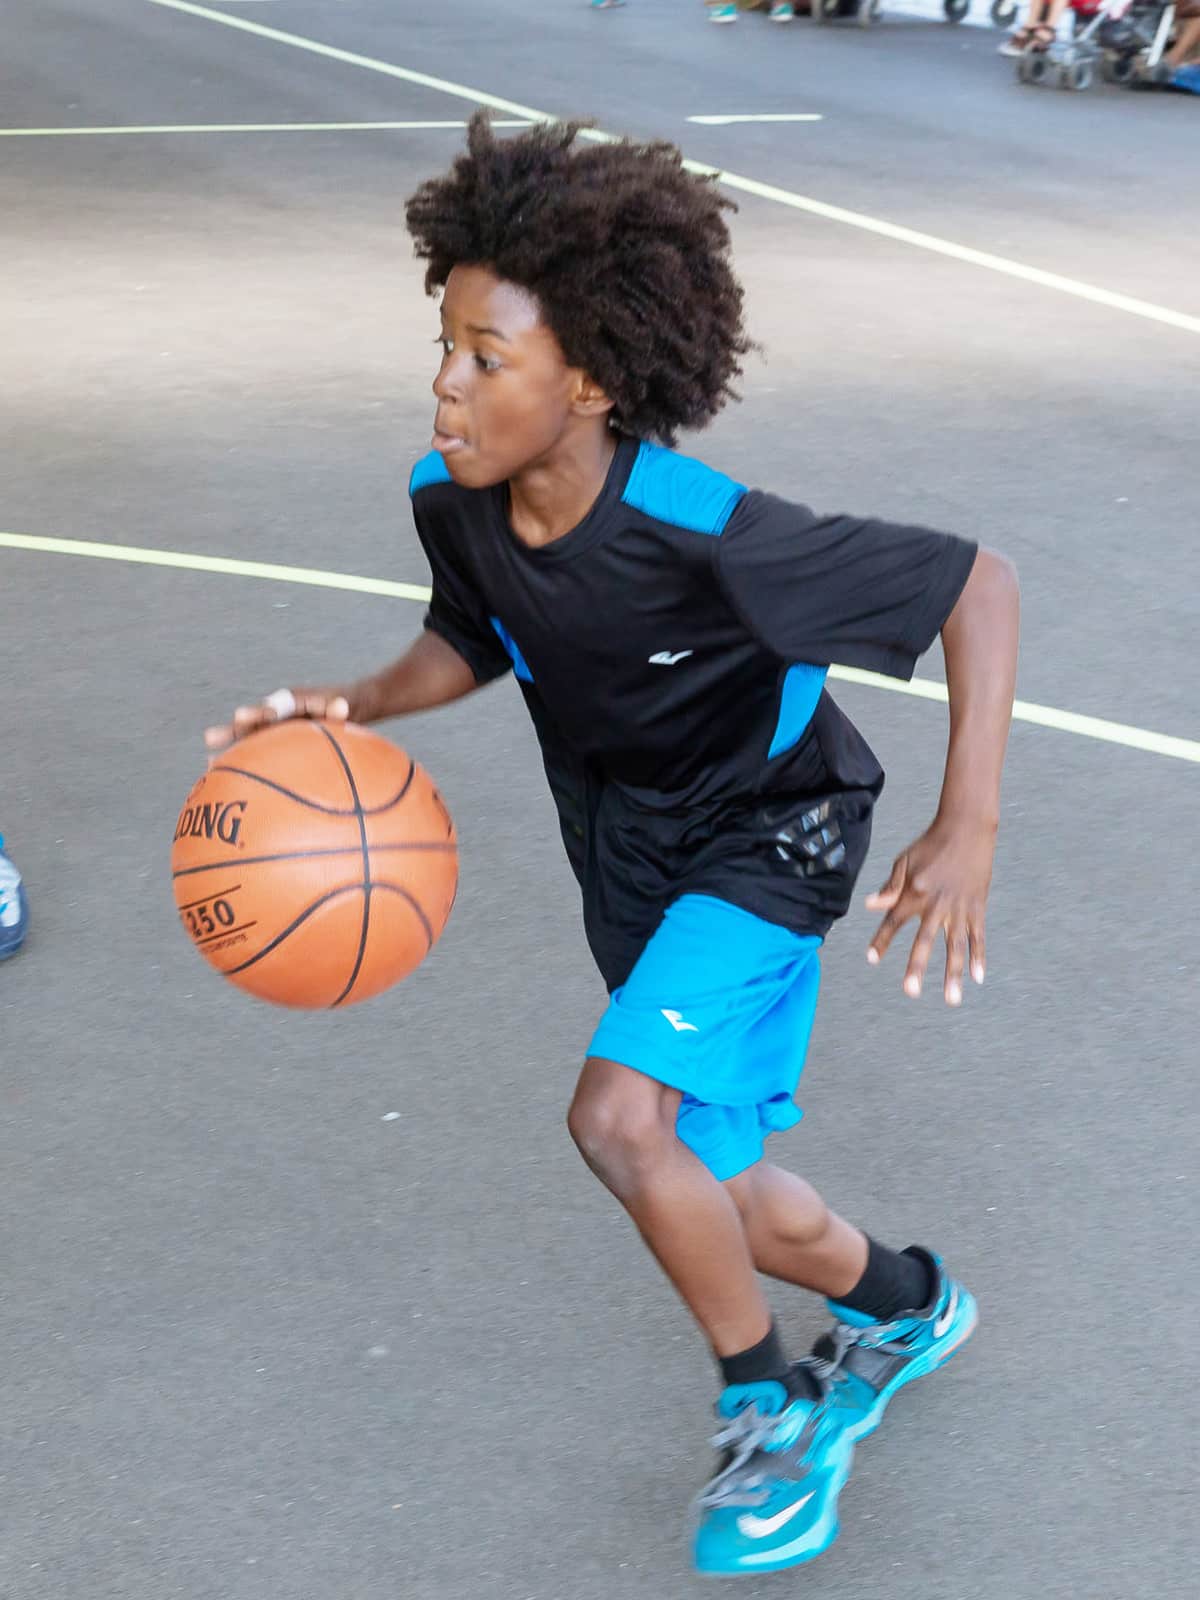 Boy running with basketball.